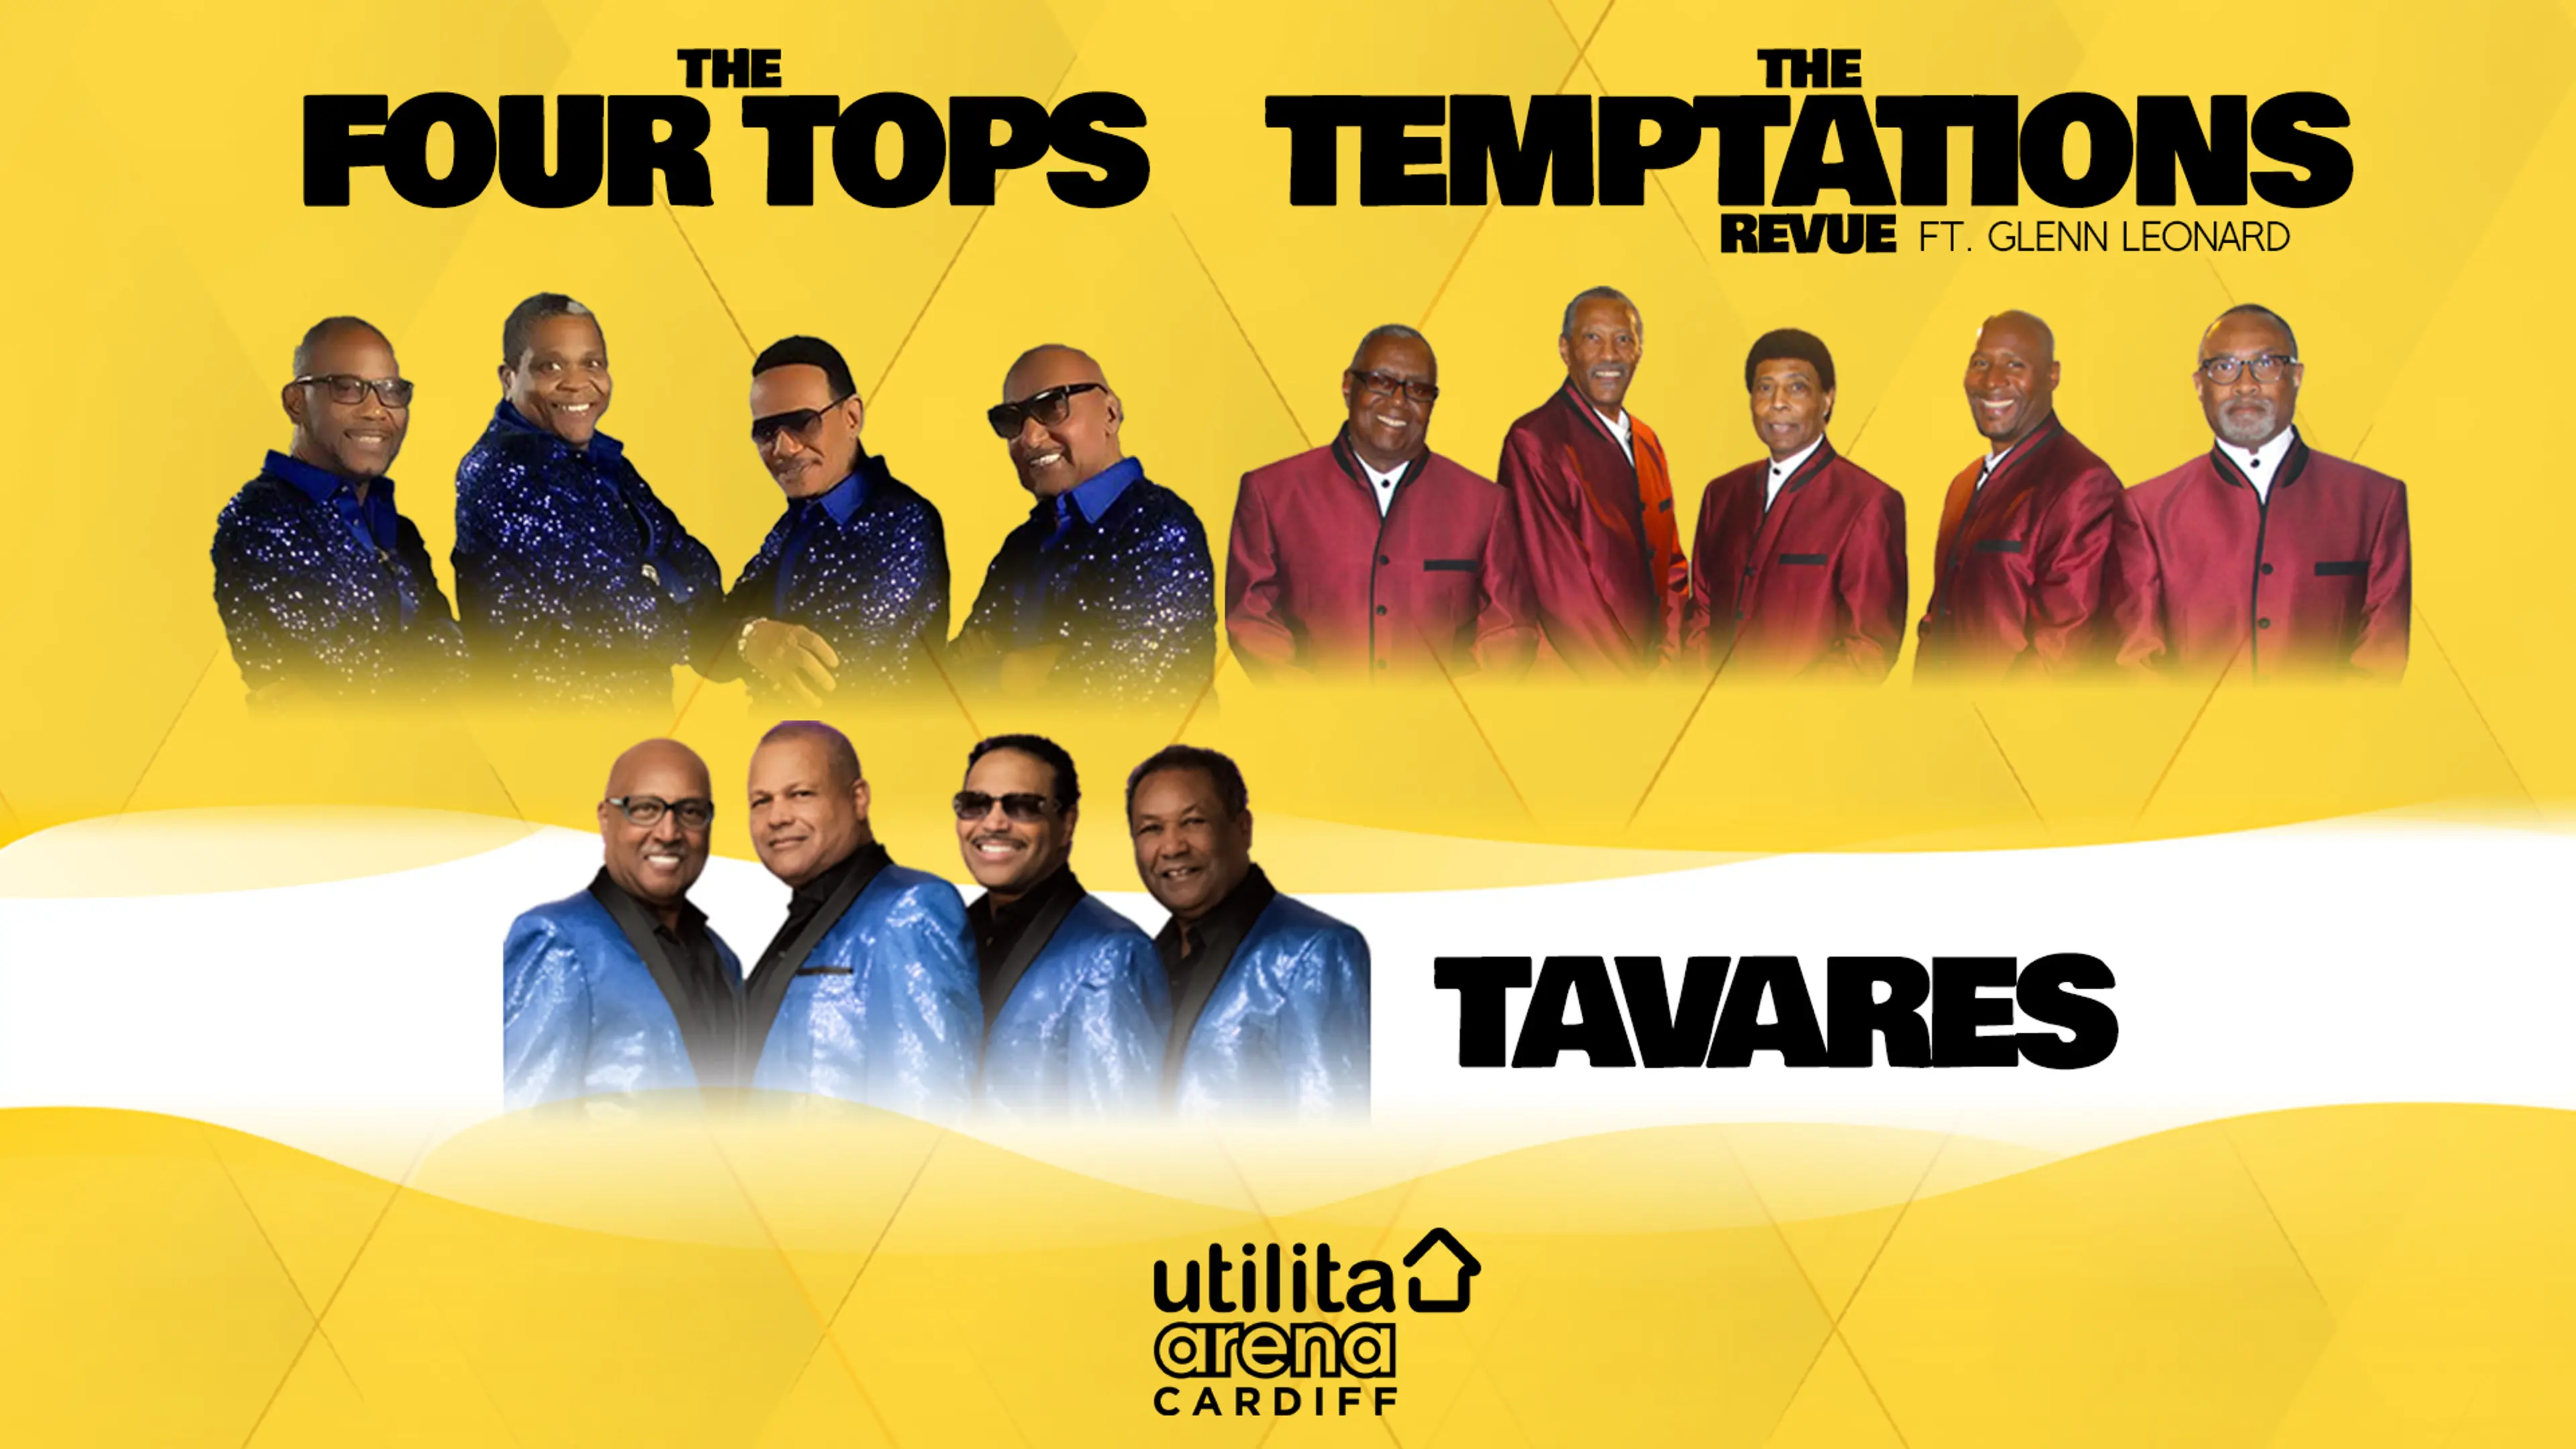 The Four Tops, The Temptations revue ft. Glenn Leonard & Tavares